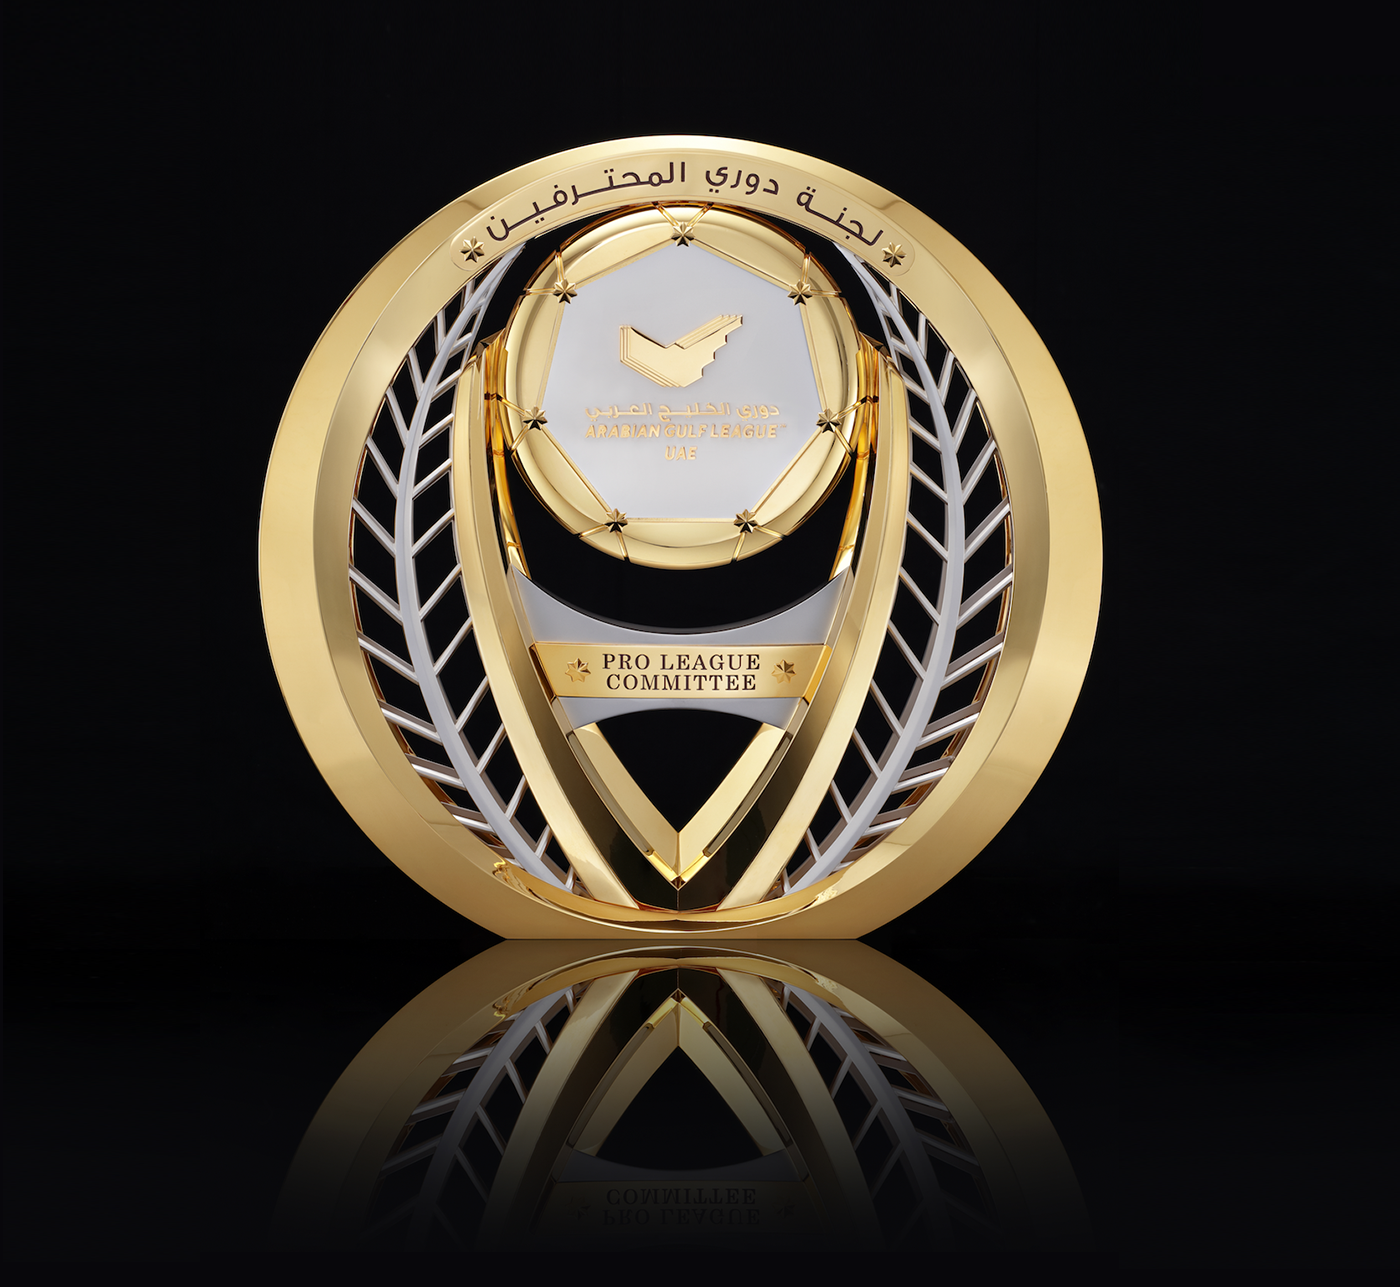 The Arabian Gulf League Shield